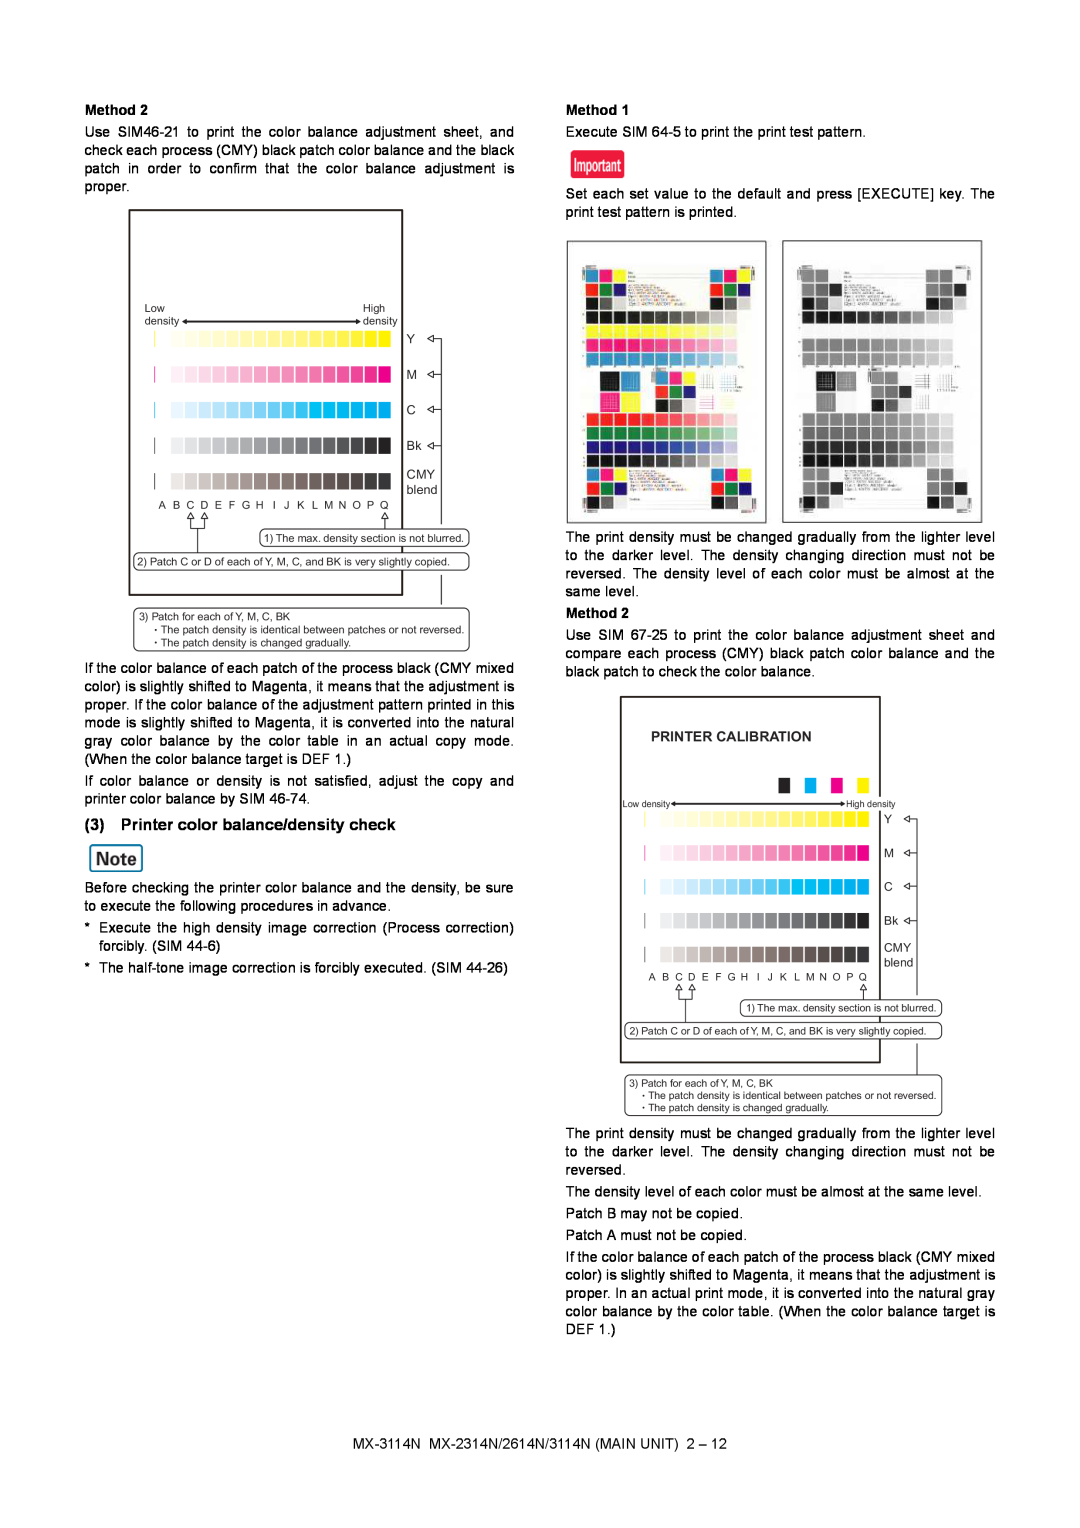 Sharp MX-3114N, MX-2614N, MX-2314N installation manual Printer color balance/density check, Method, Printer Calibration 